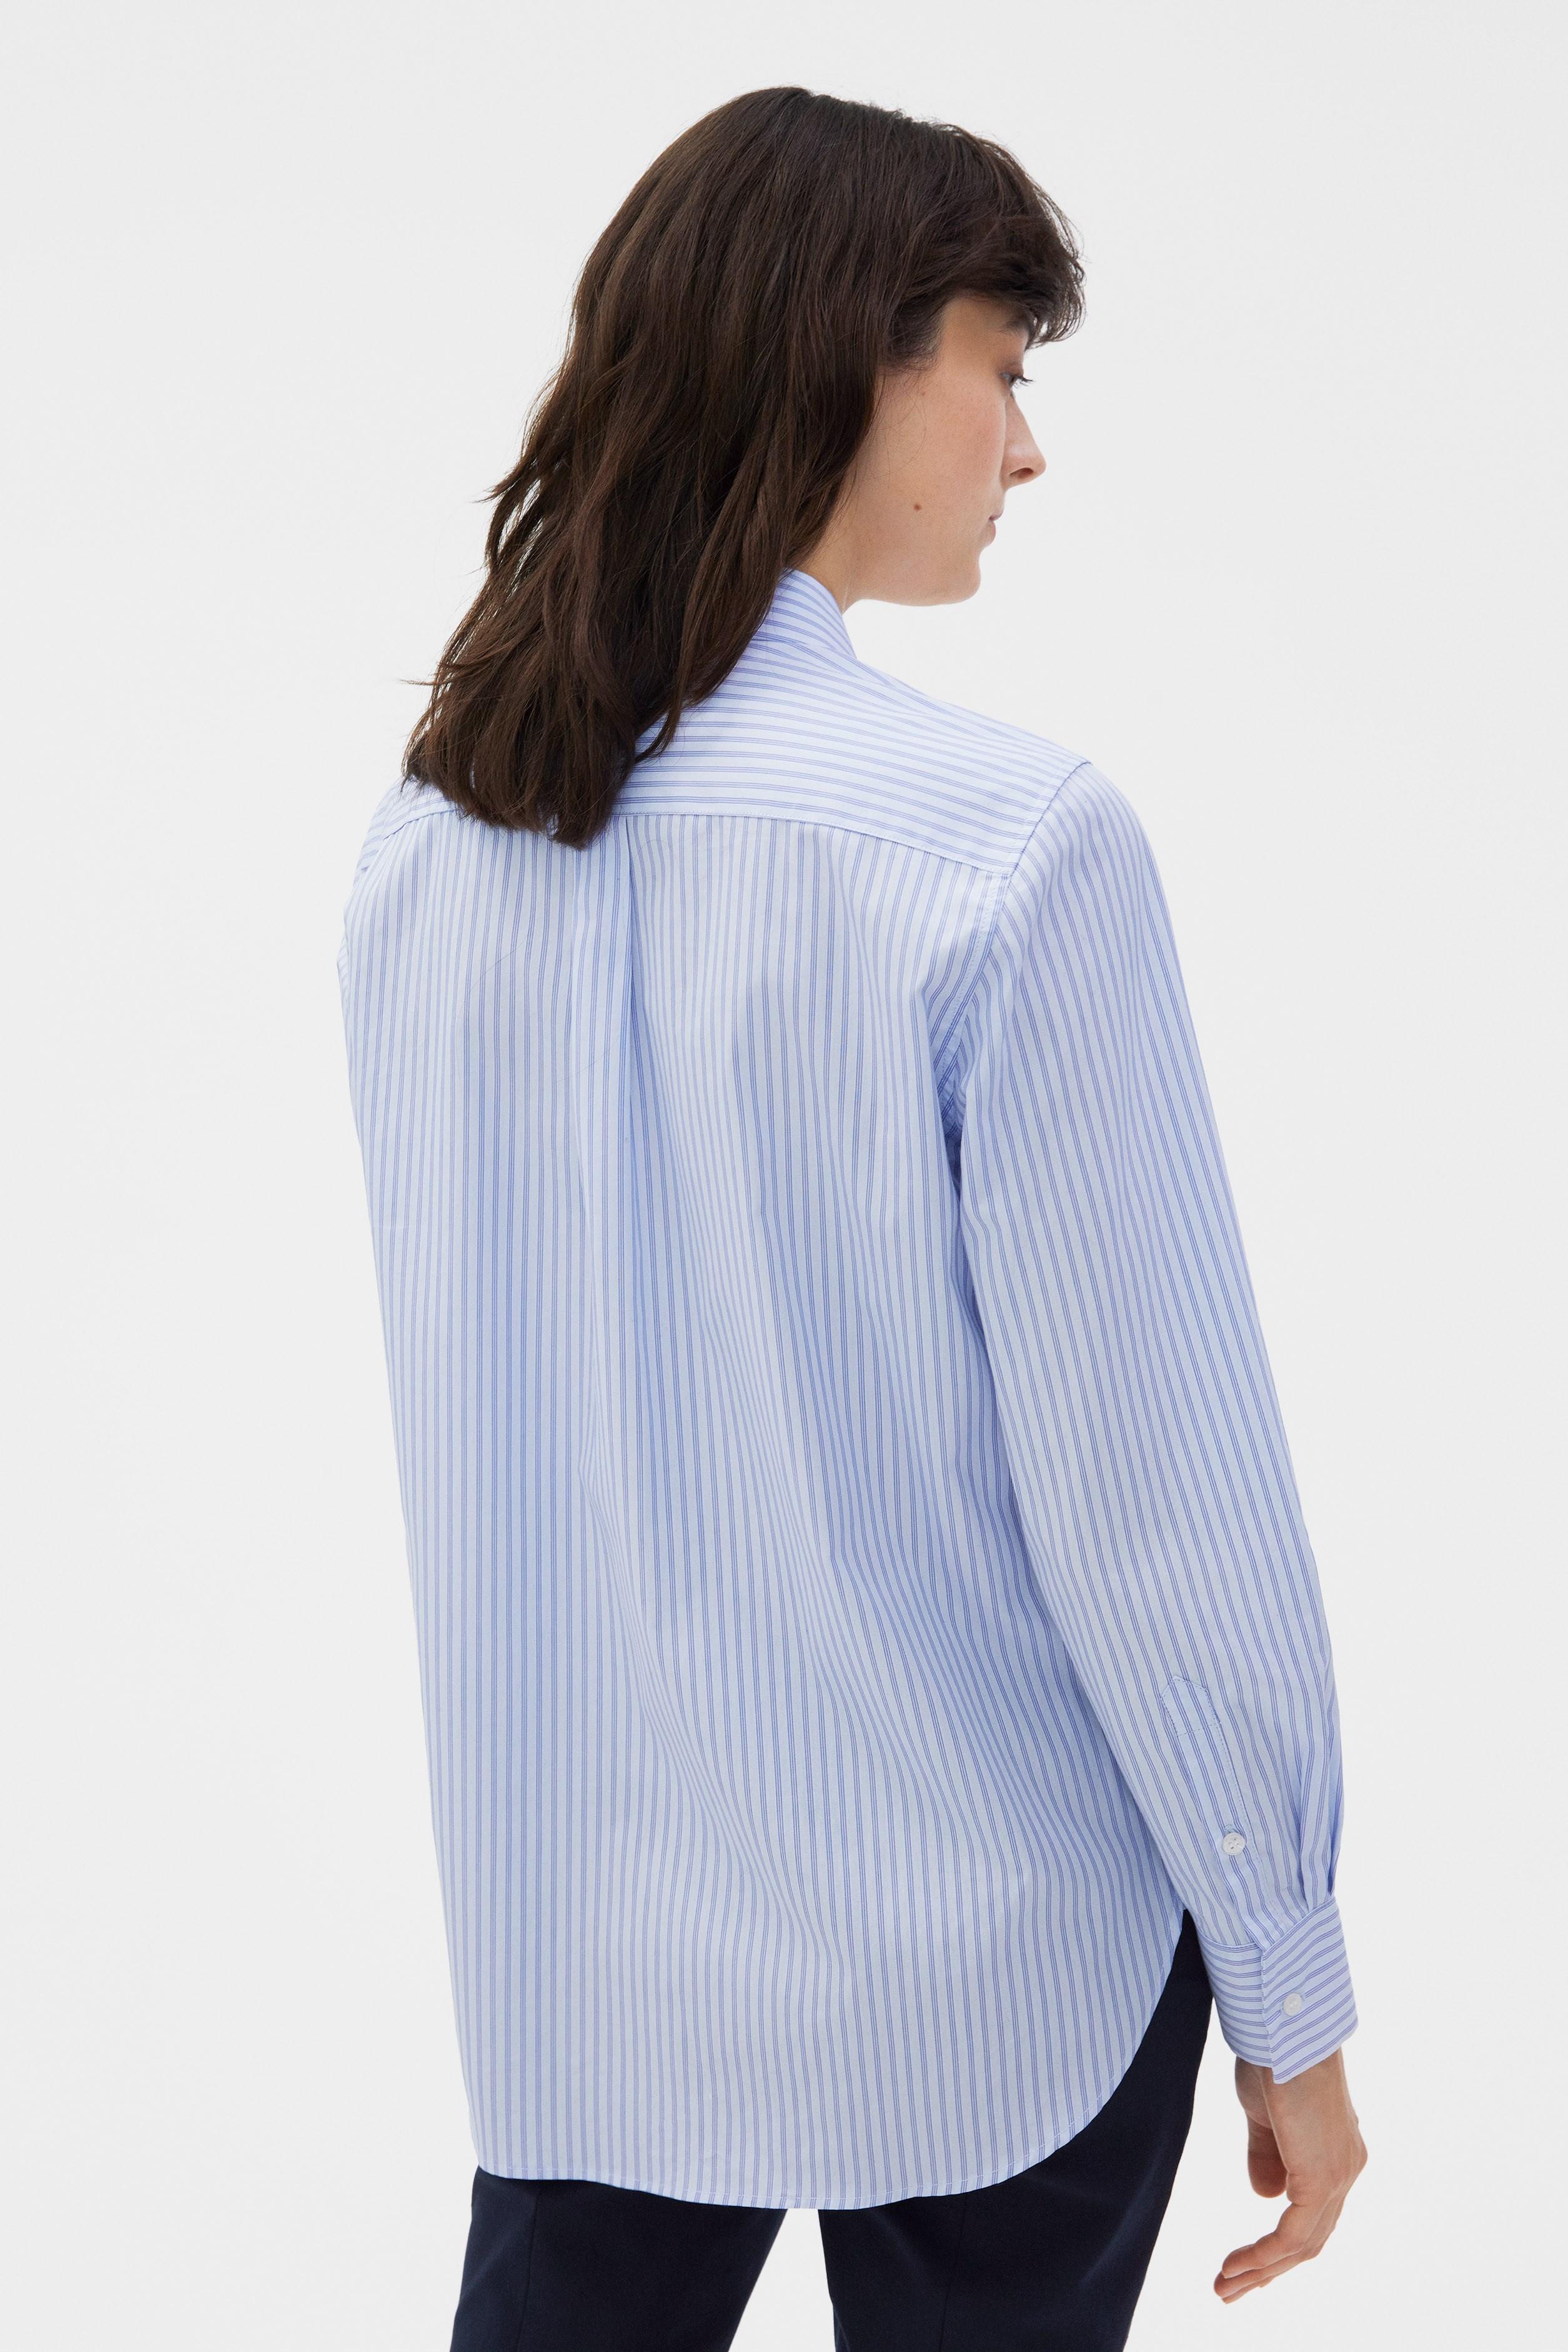 Filippa K Cotton Jane Striped Shirt in Blue Stripe (Blue) | Lyst UK